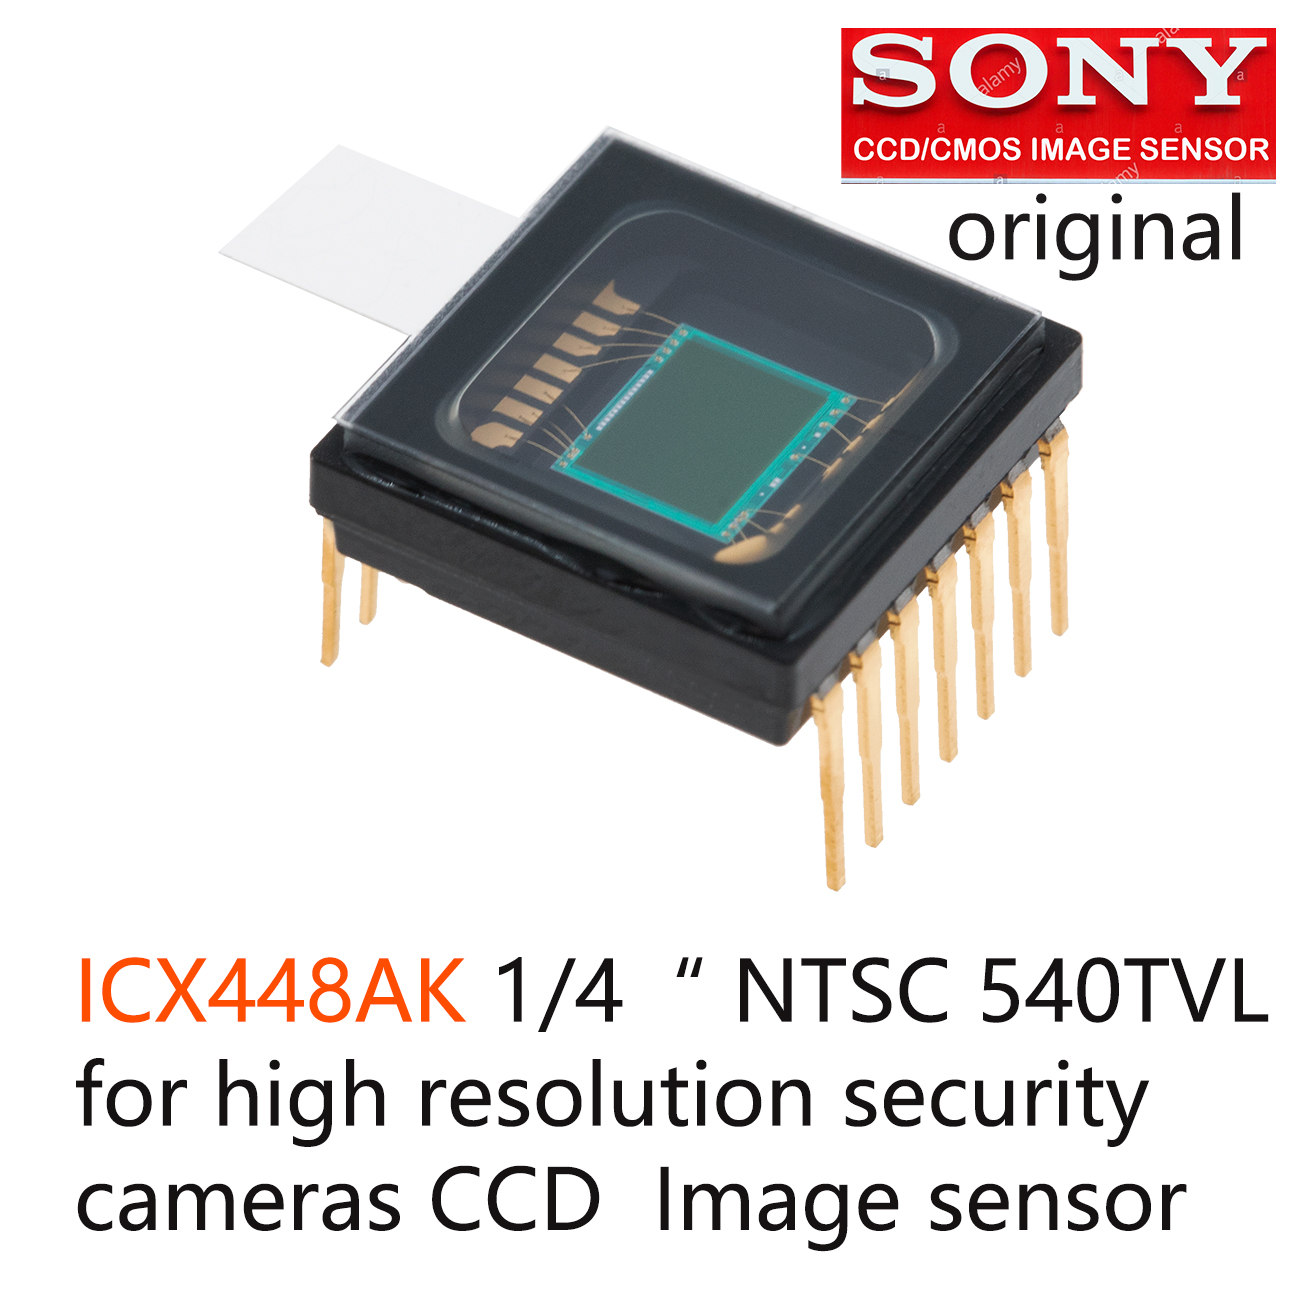 ICX448AK，SONY 1/4-inch CCD Image Sensor, for NTSC Color Security Analog Video Cameras image sensor, High resolution analog signal CCD，Security Cameras sensor